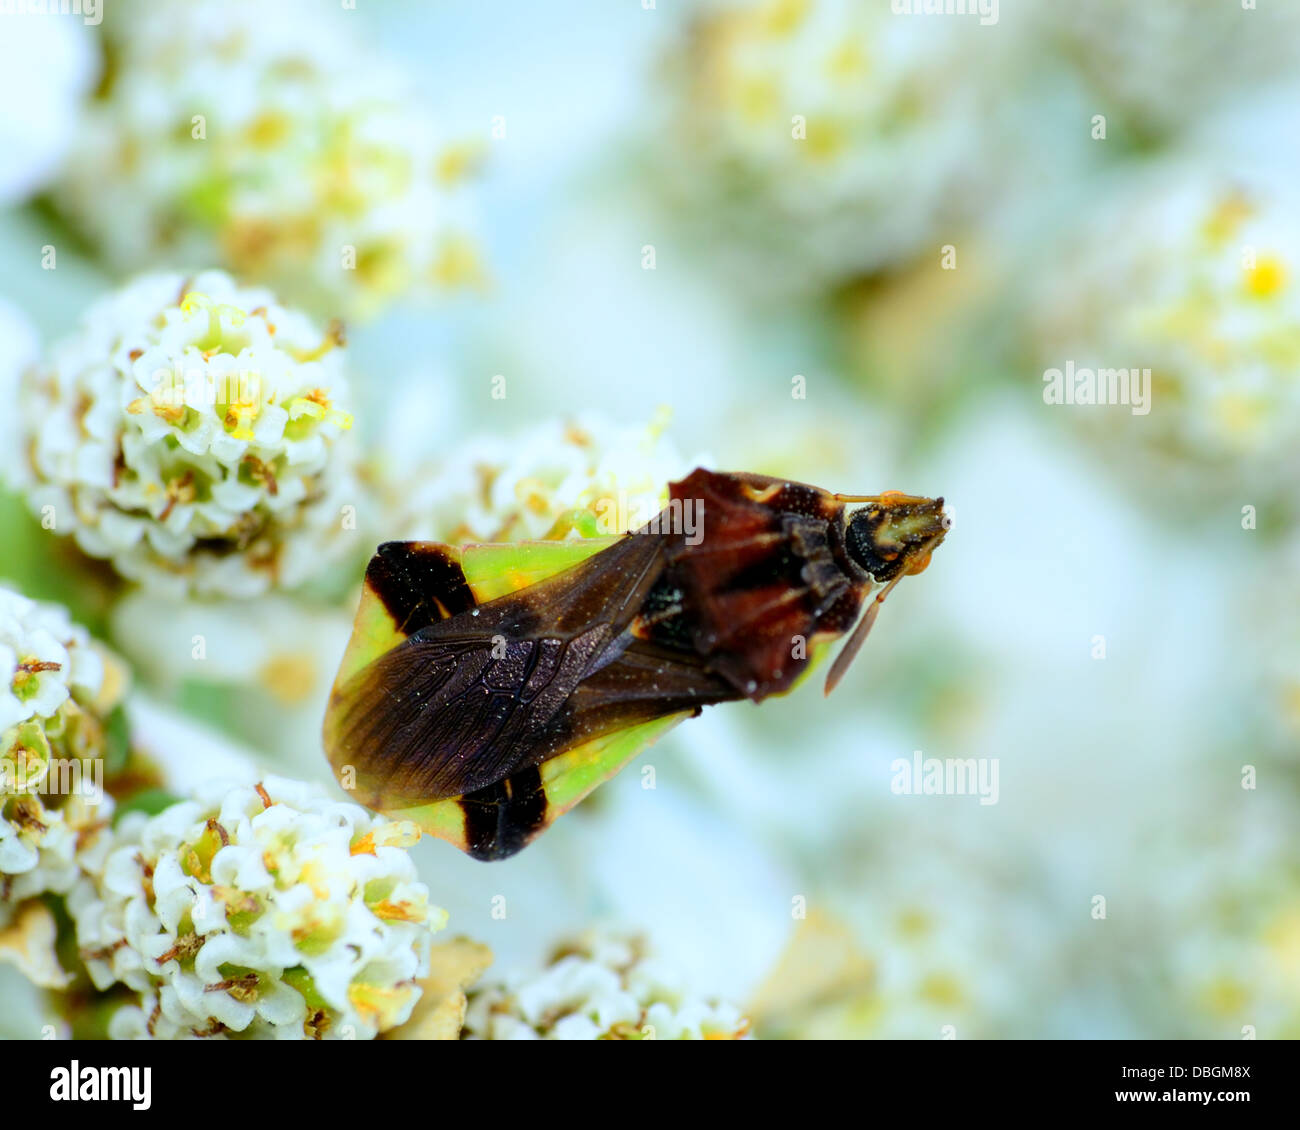 An Ambush Bug perched on a flower. Stock Photo